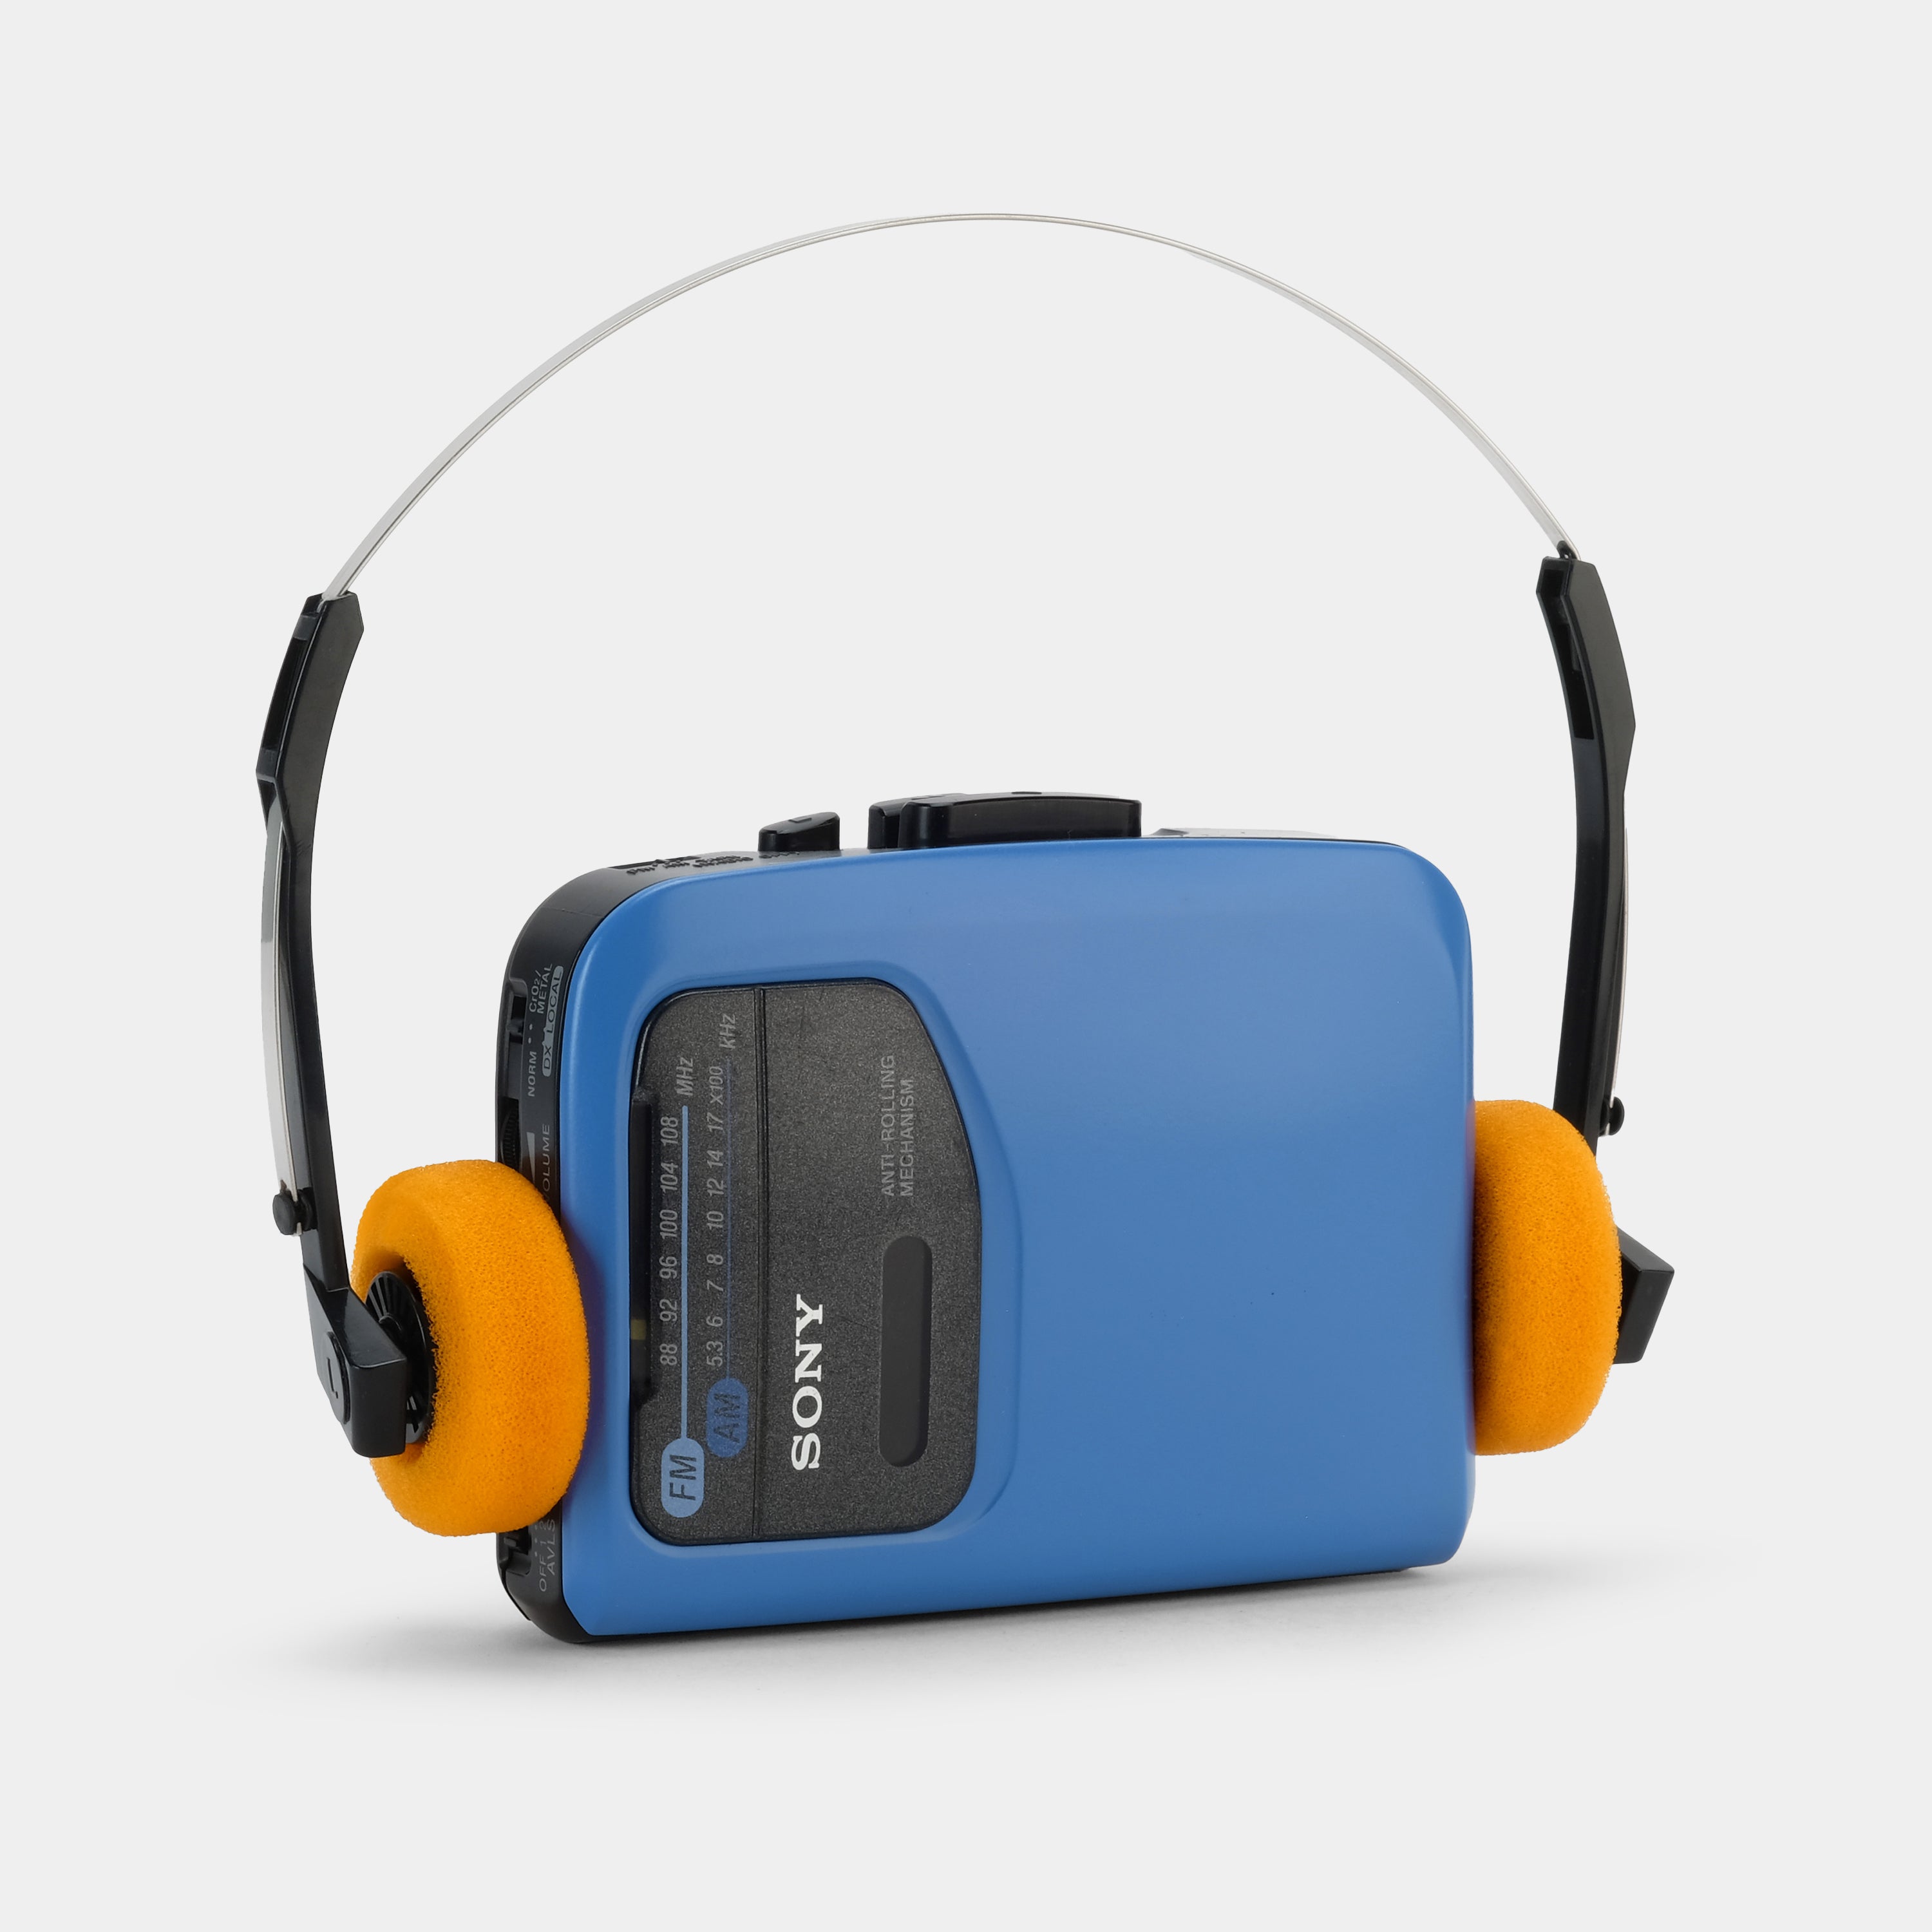 Sony Walkman WM-FX101 AM/FM Blue Portable Cassette Player